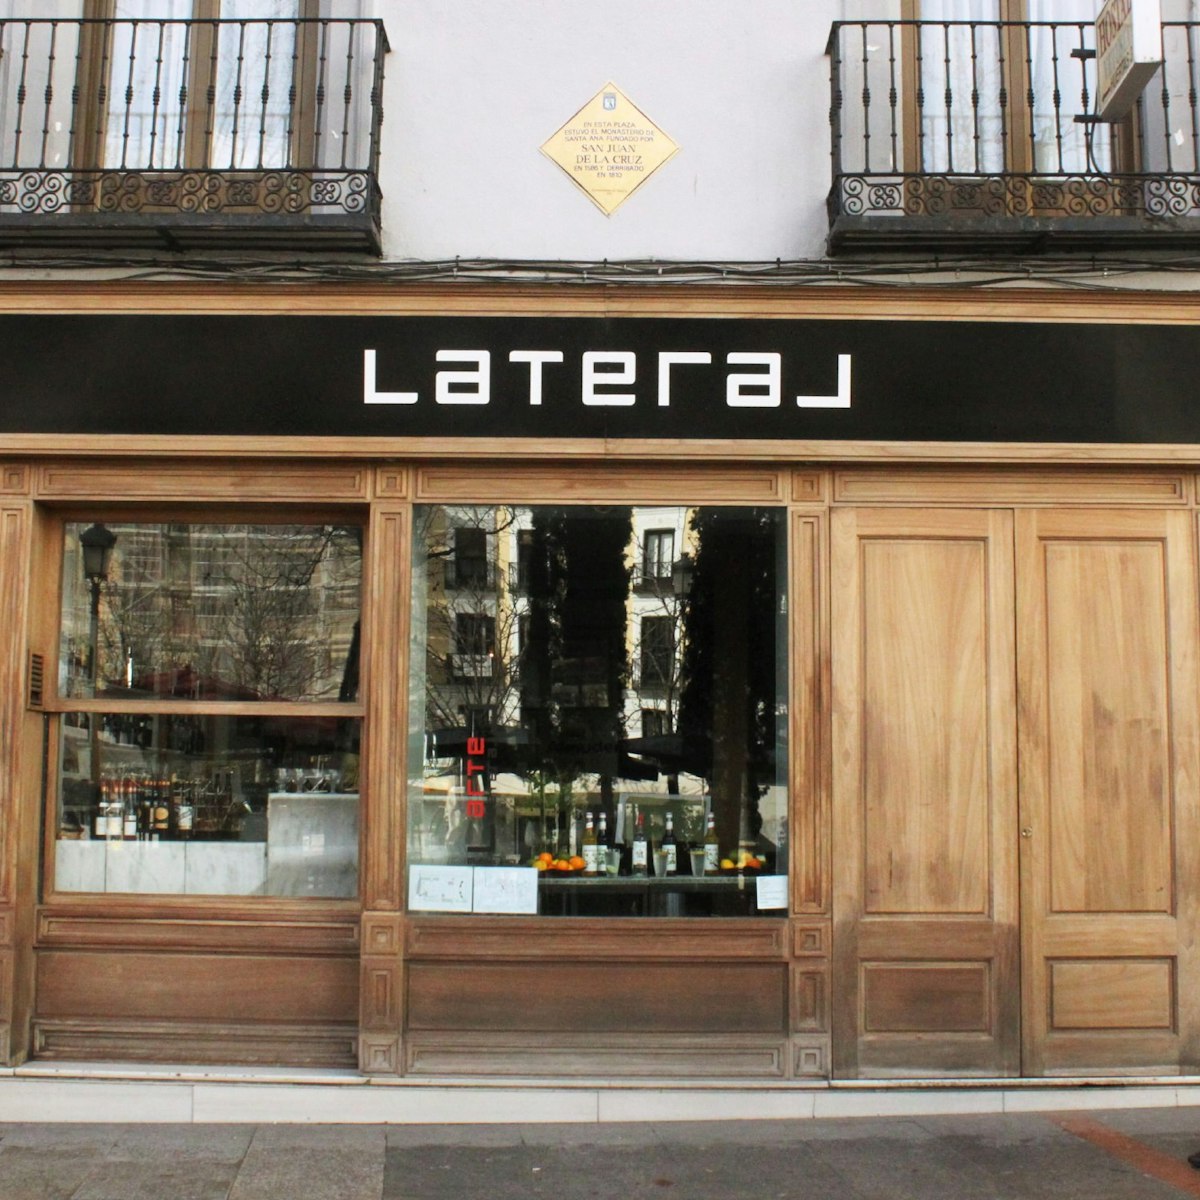 El Lateral located in Plaza Santa Ana.